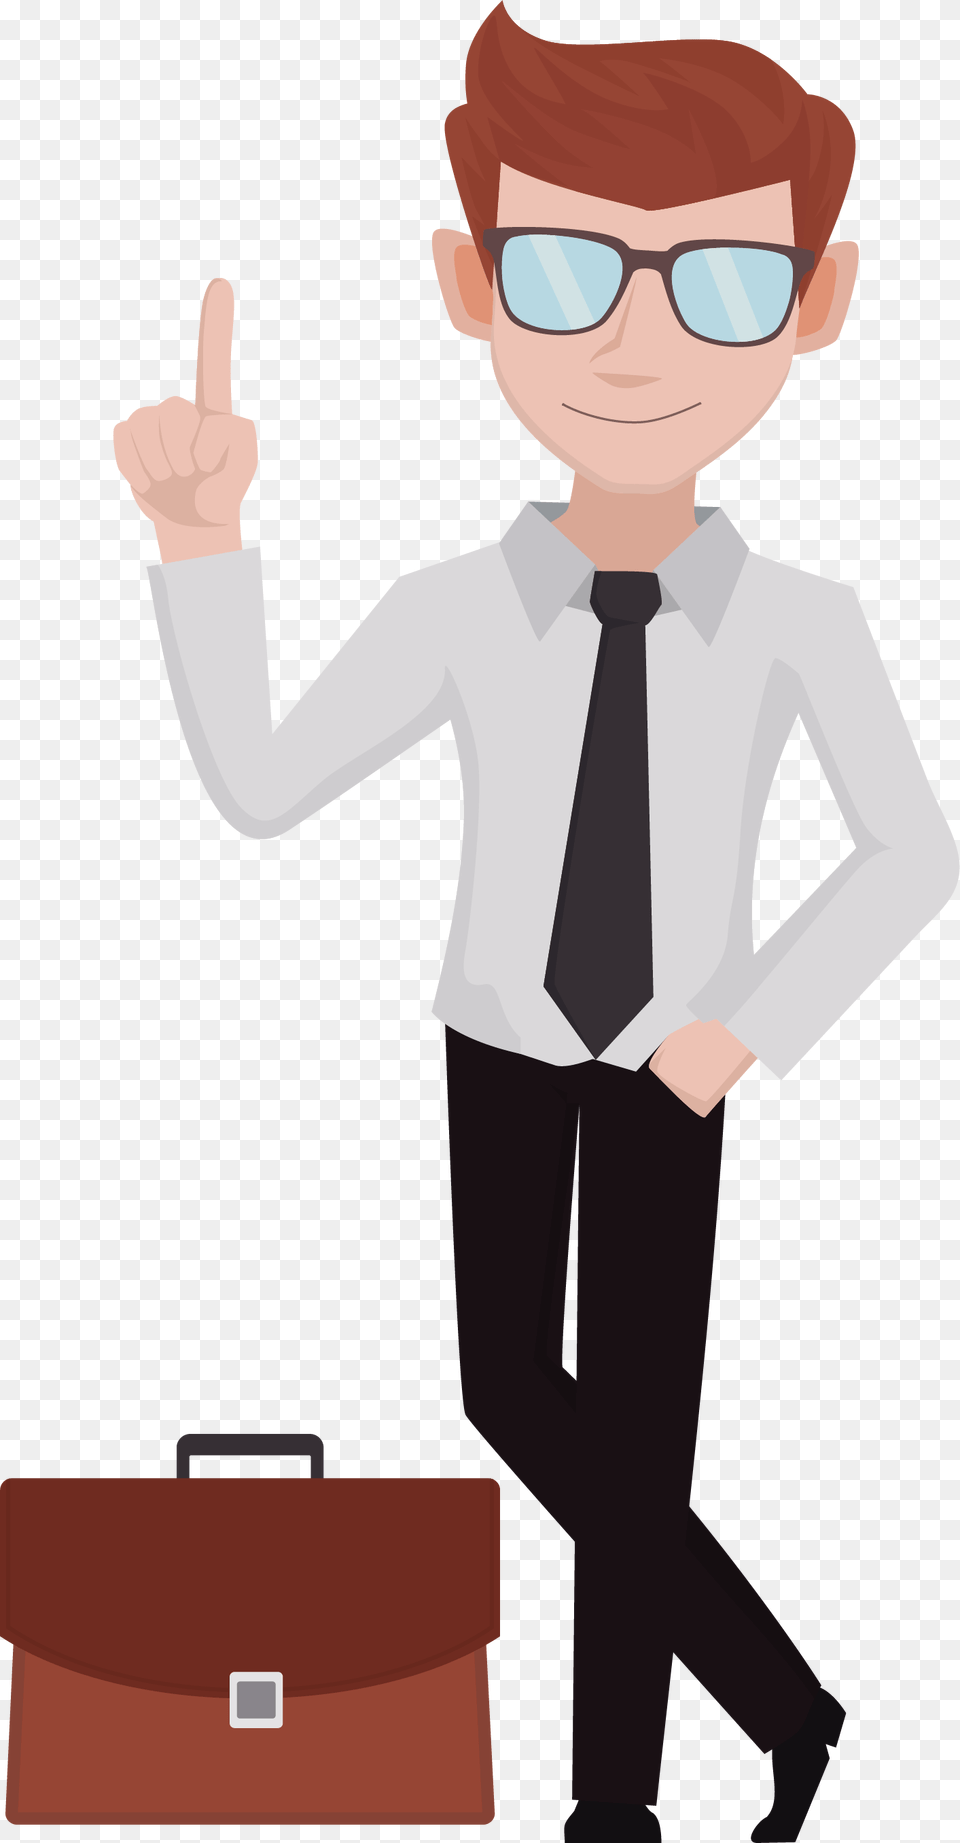 Slender Man Clipart Transparent Business Person Clipart Imagenes De Interes Personal, Accessories, Formal Wear, Bag, Tie Free Png Download